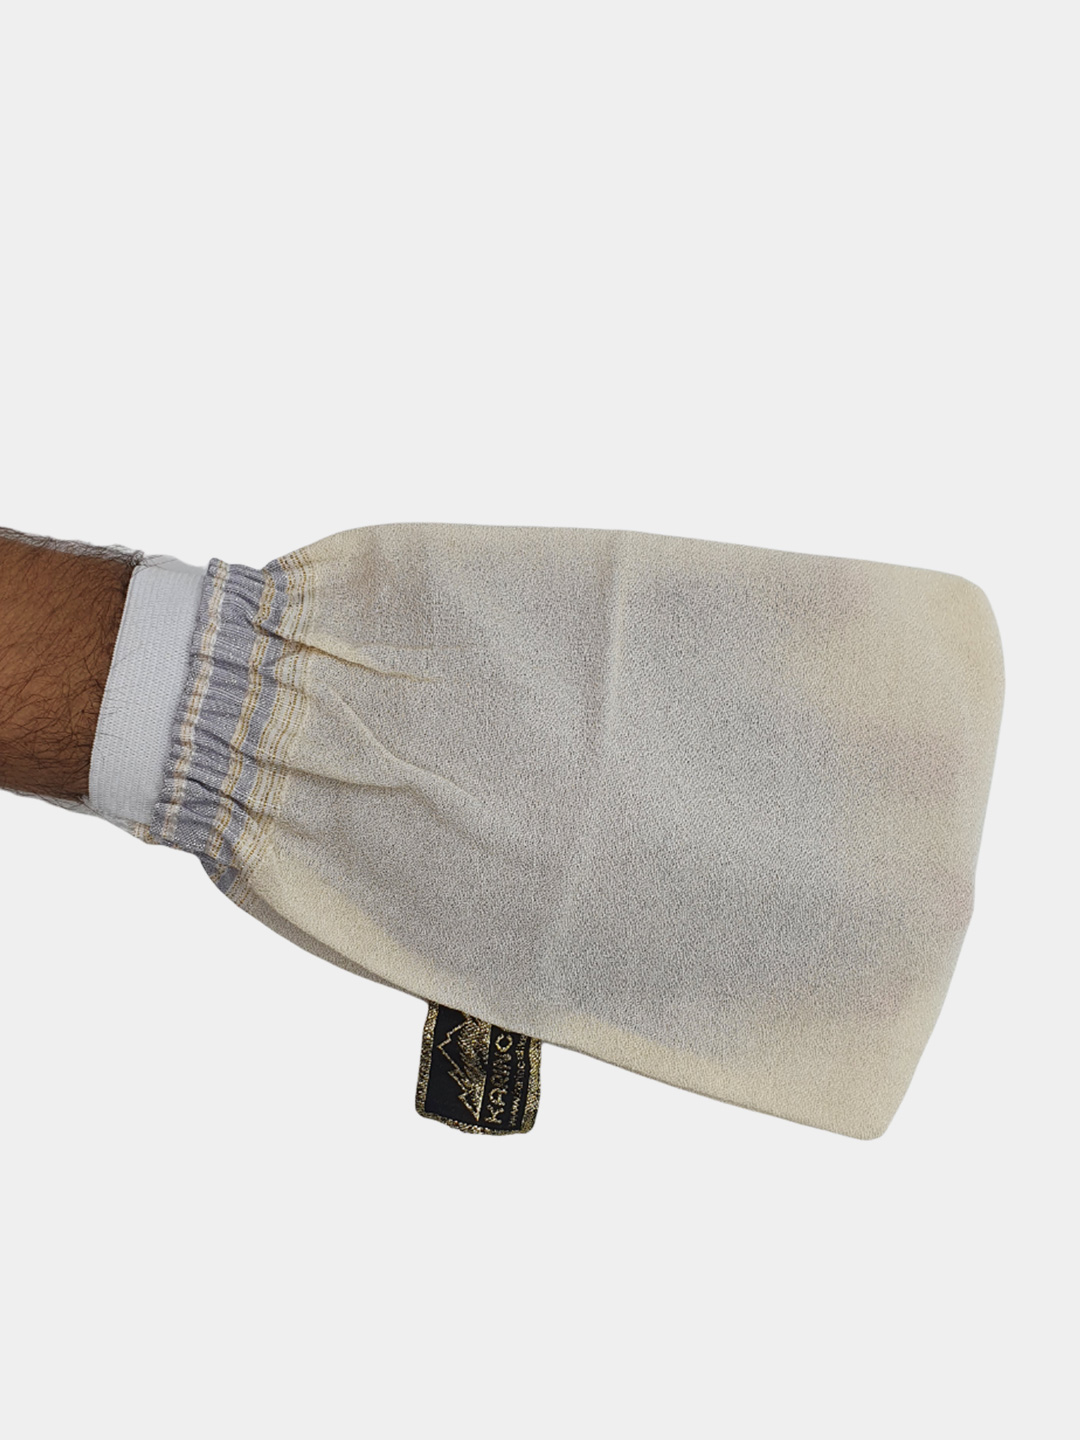 Мочалка/ рукавица/варежка/кёсе (кесе, kese) для пилинга тела .